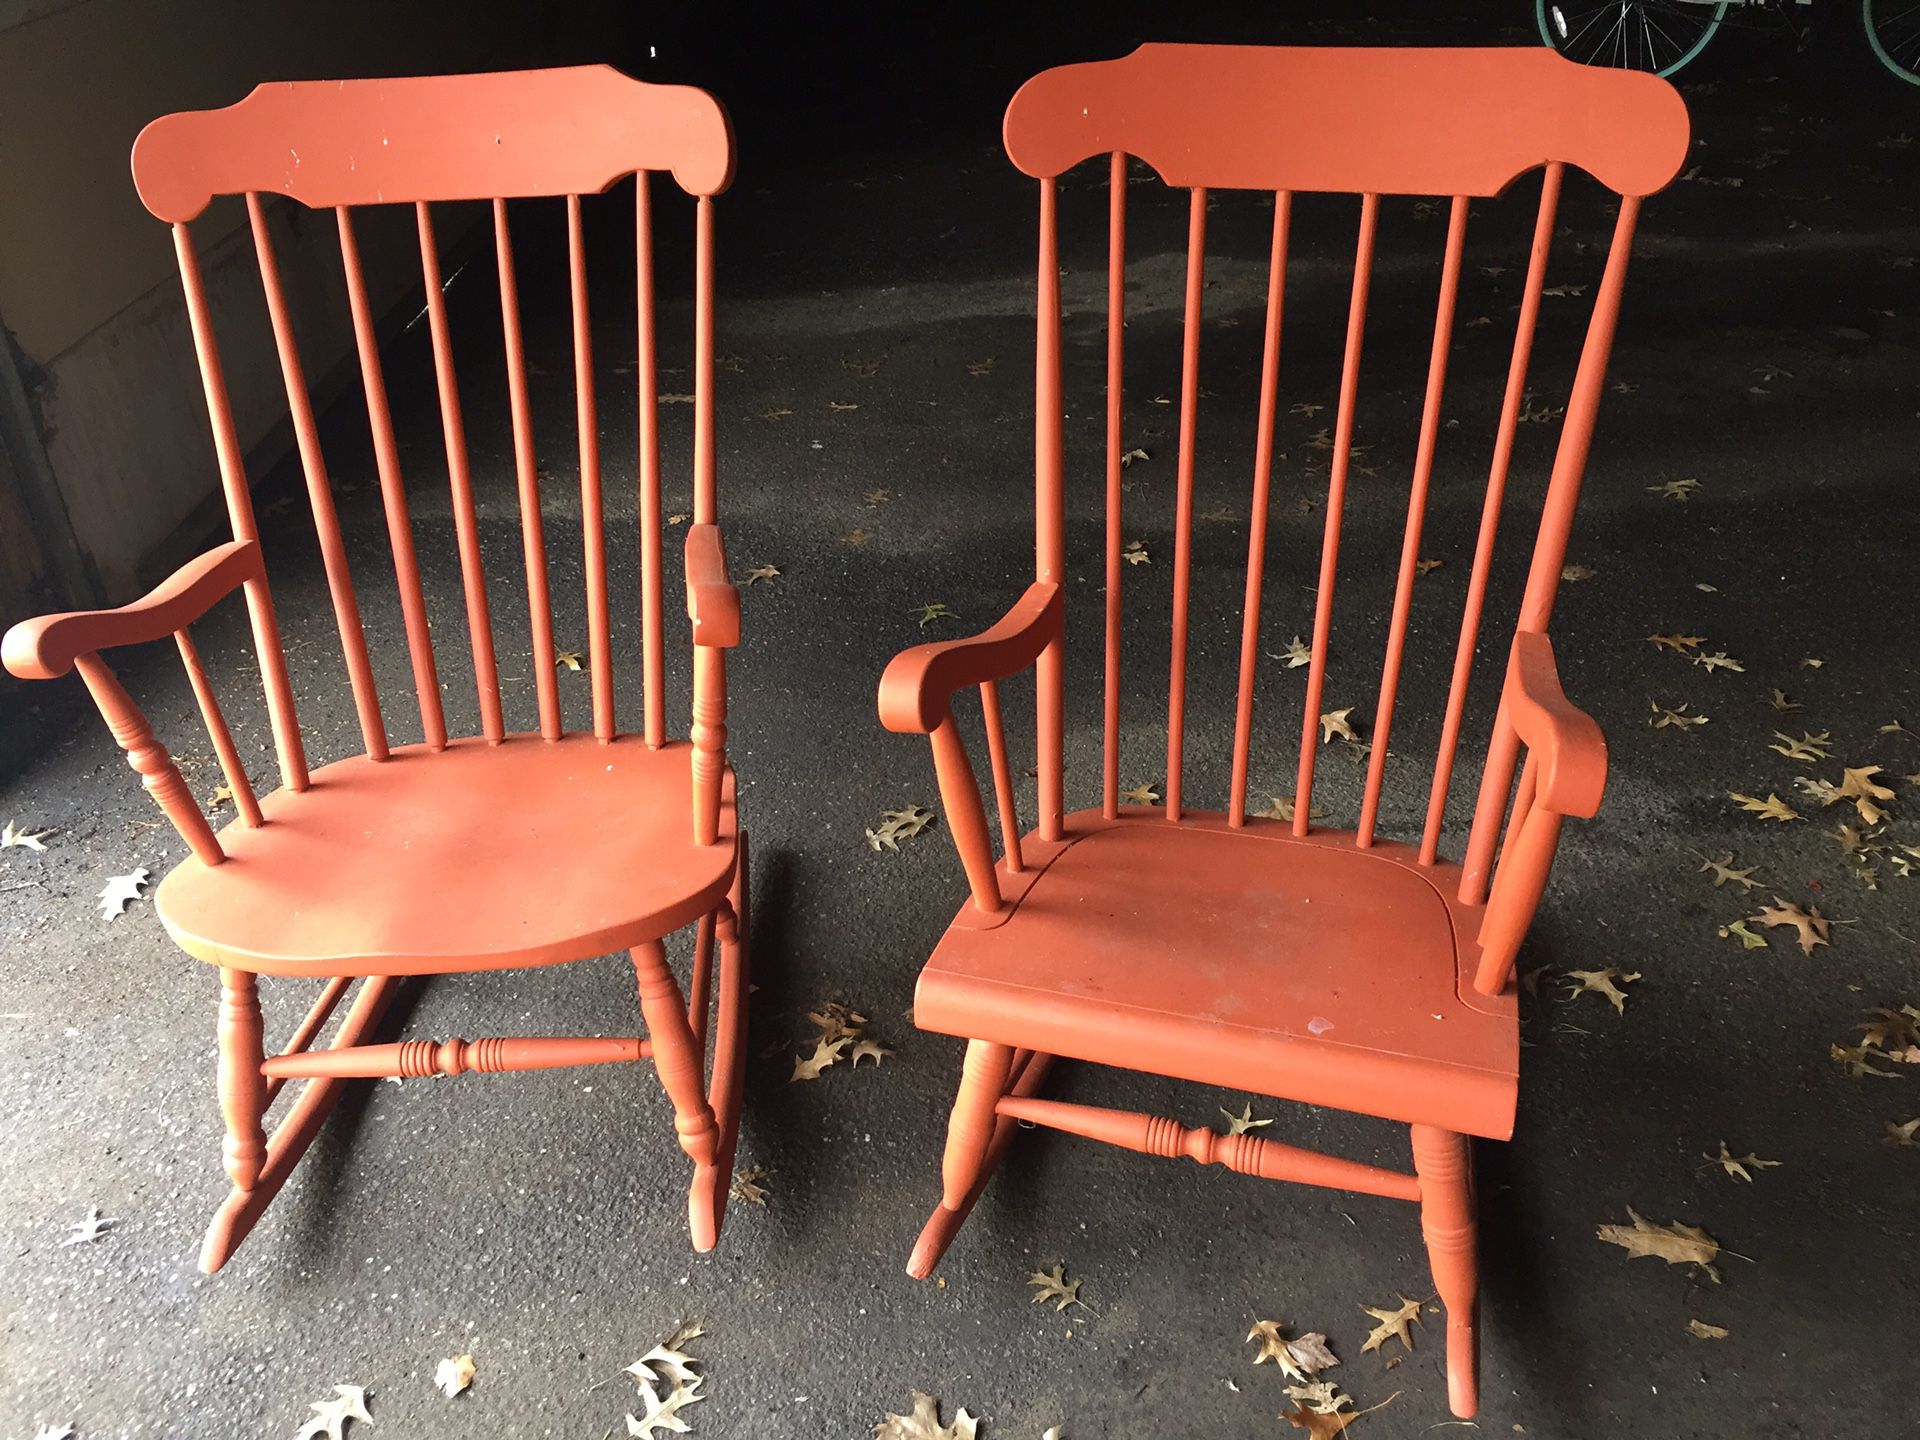 Rocking chairs - Patio furniture